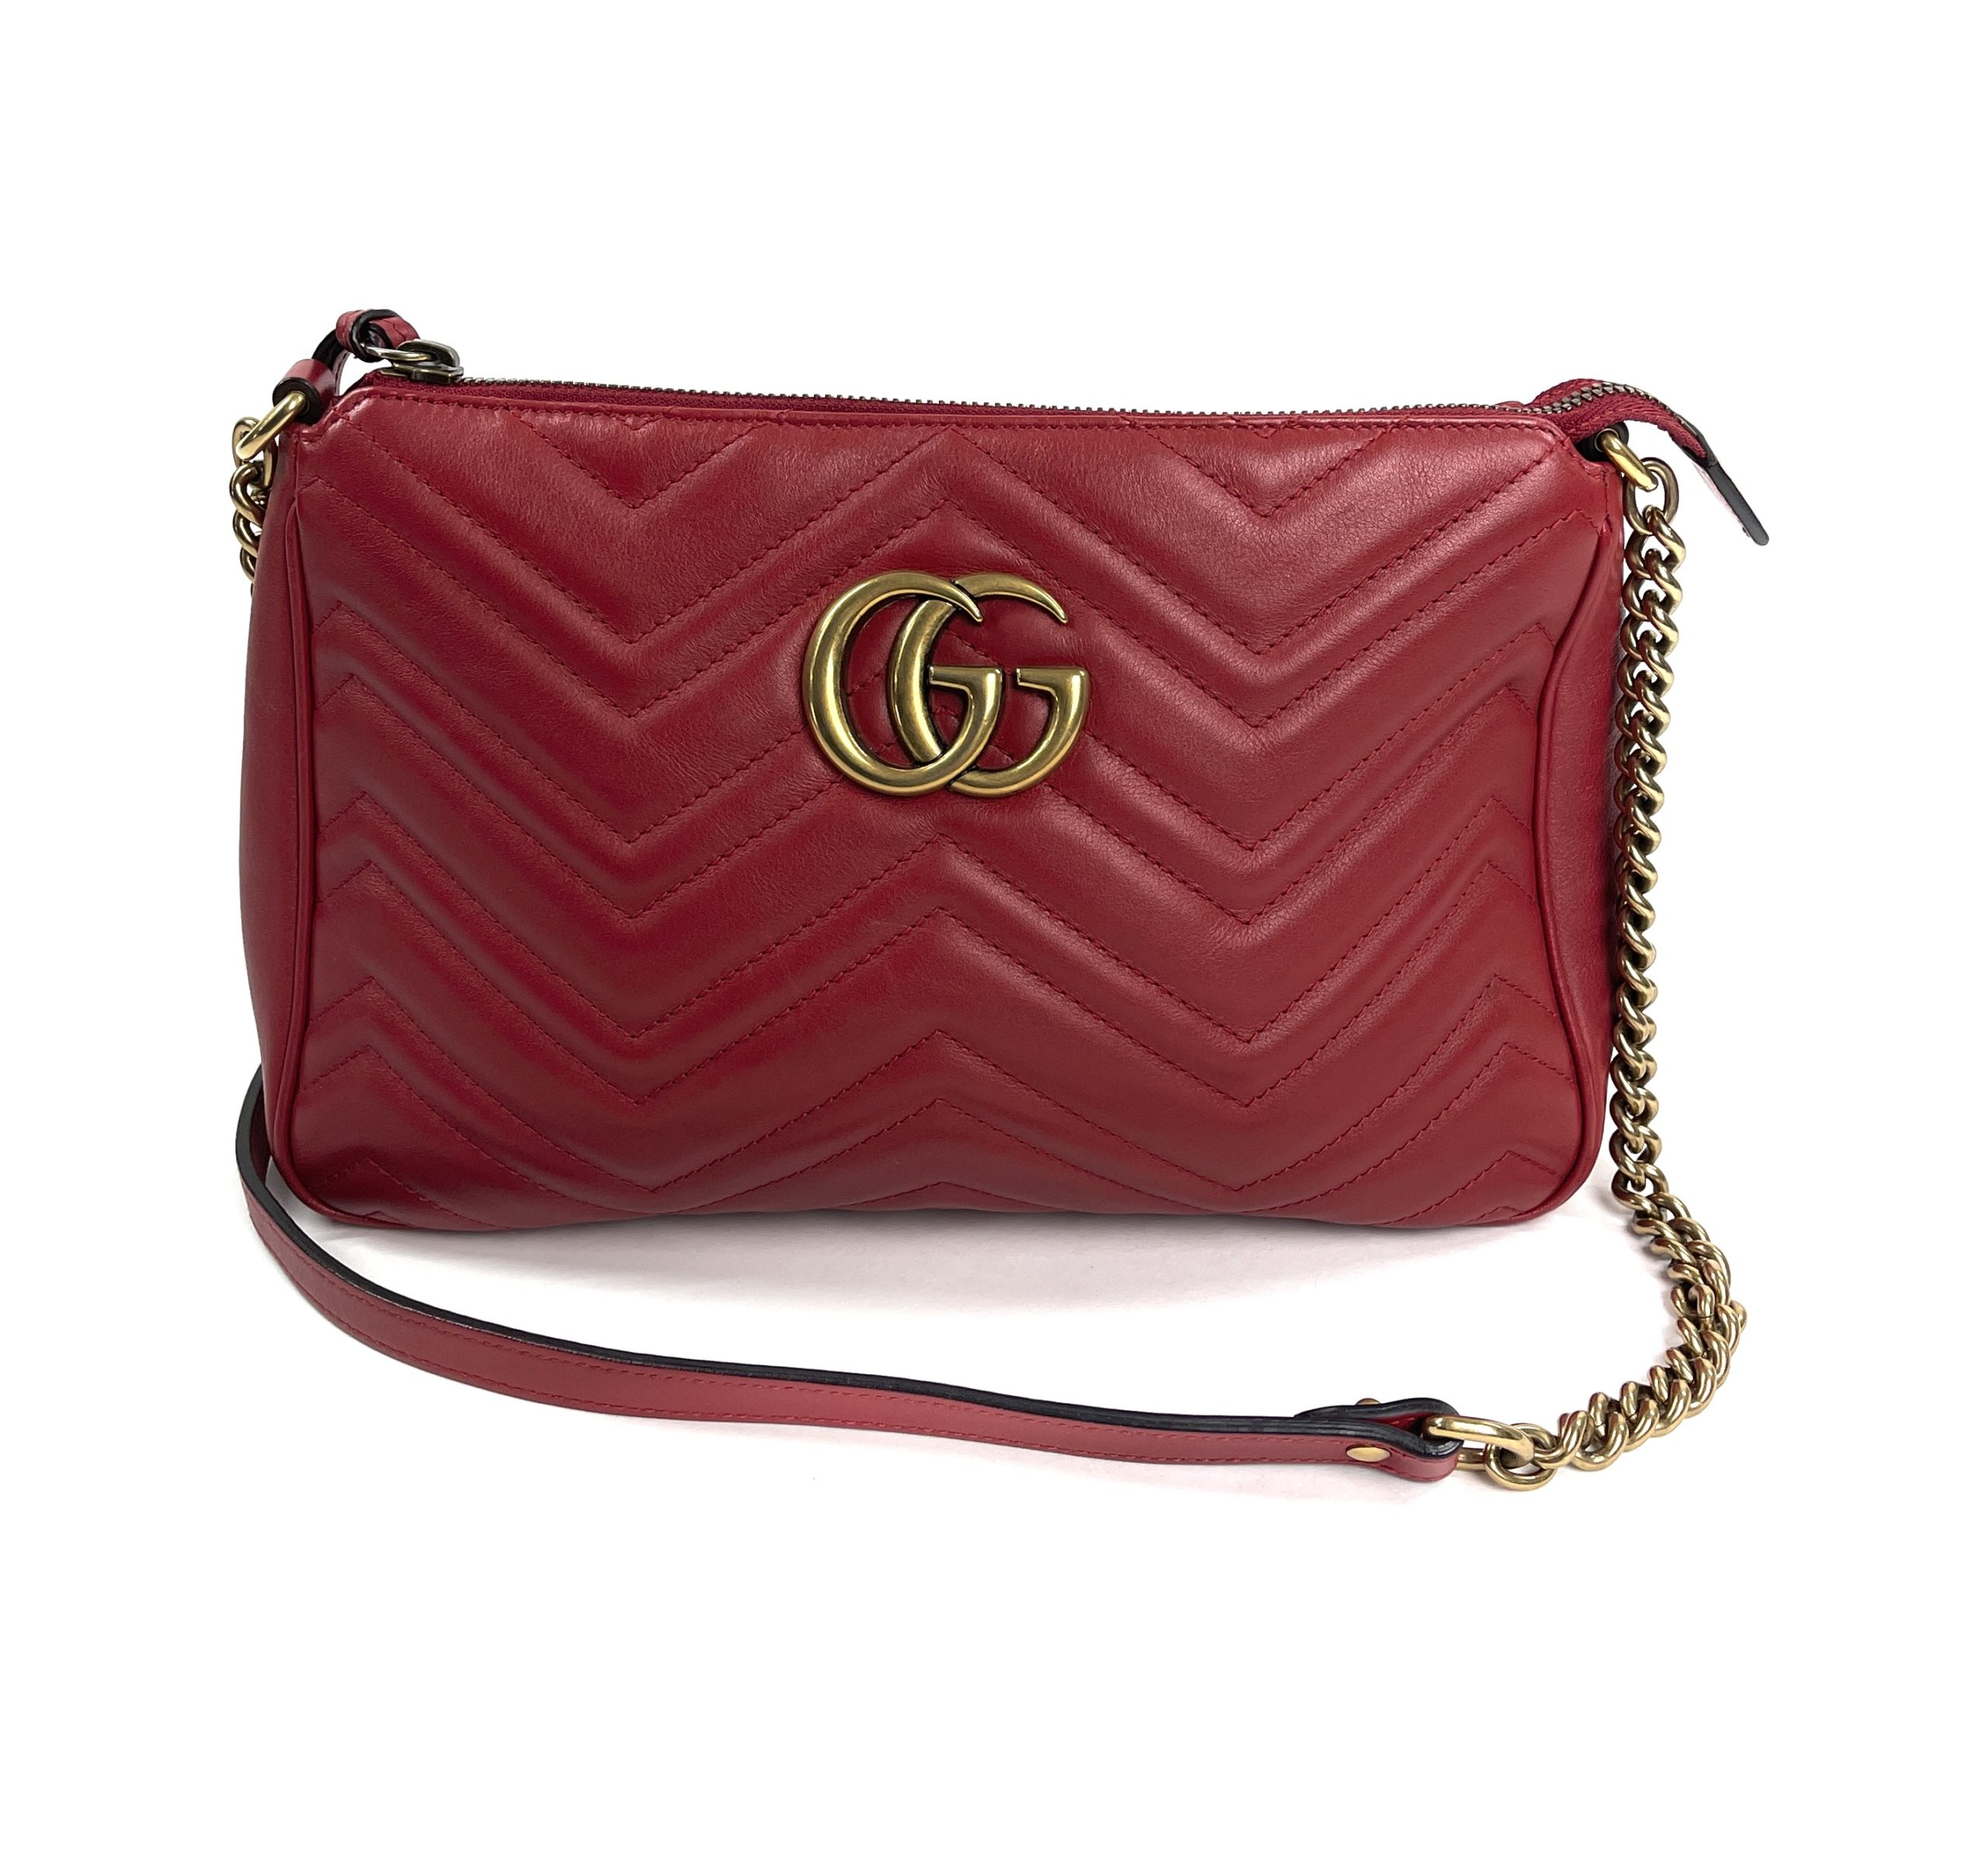 GUCCI MARMONT Red Handbag